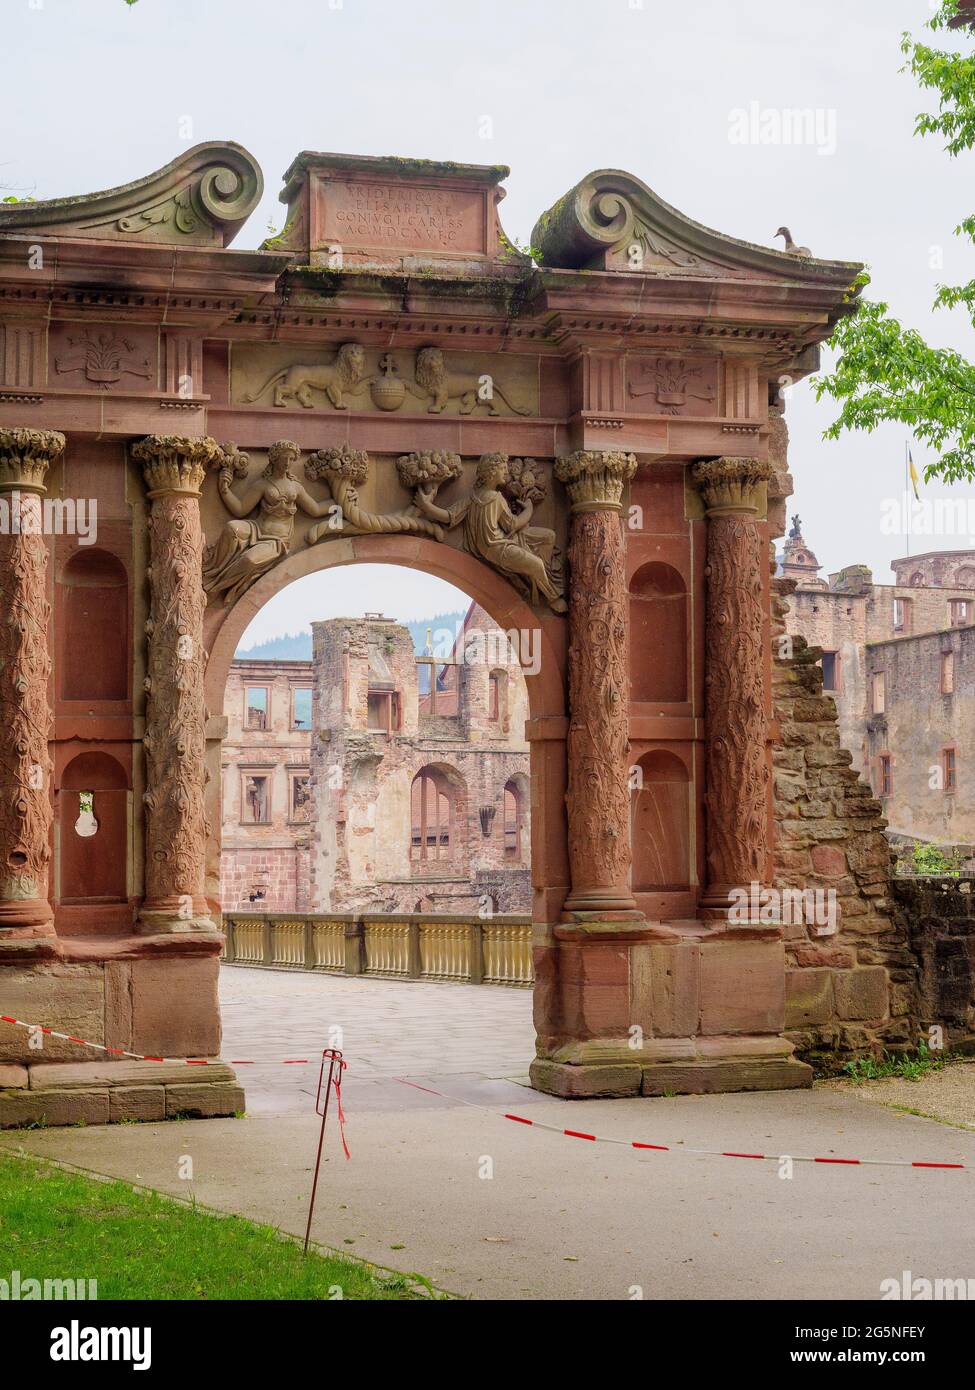 Im Inneren des Schlosses, Heidelberg, Baden-Württemberg, Deutschland, Europa Stockfoto